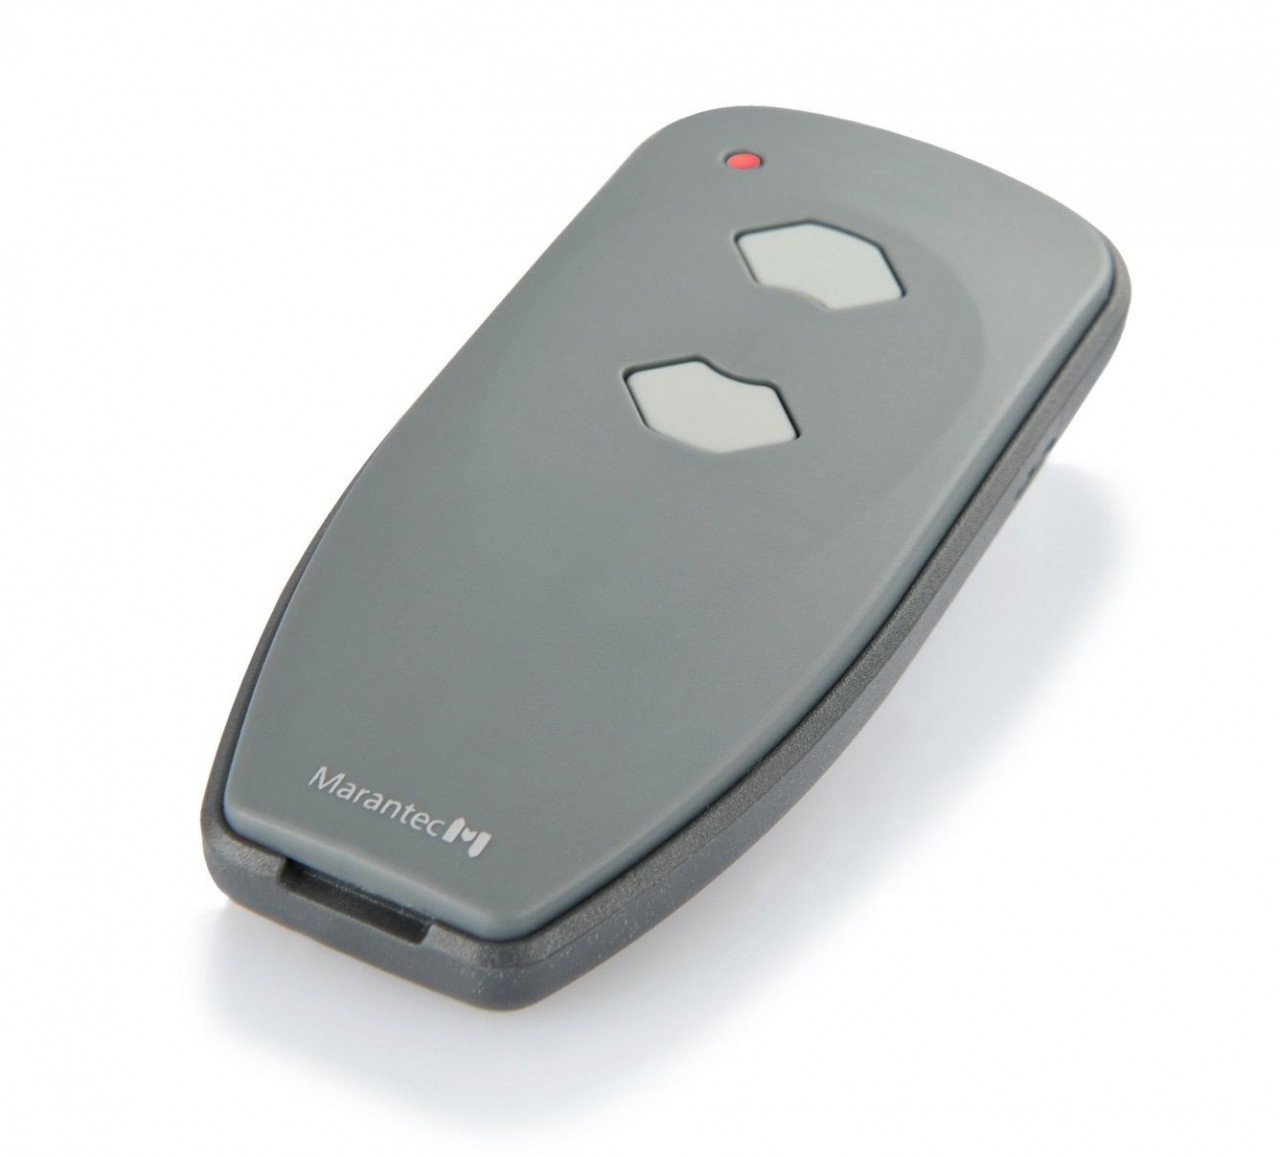 Marantec Digital 382 remote control 2-channel 868.3 MHz